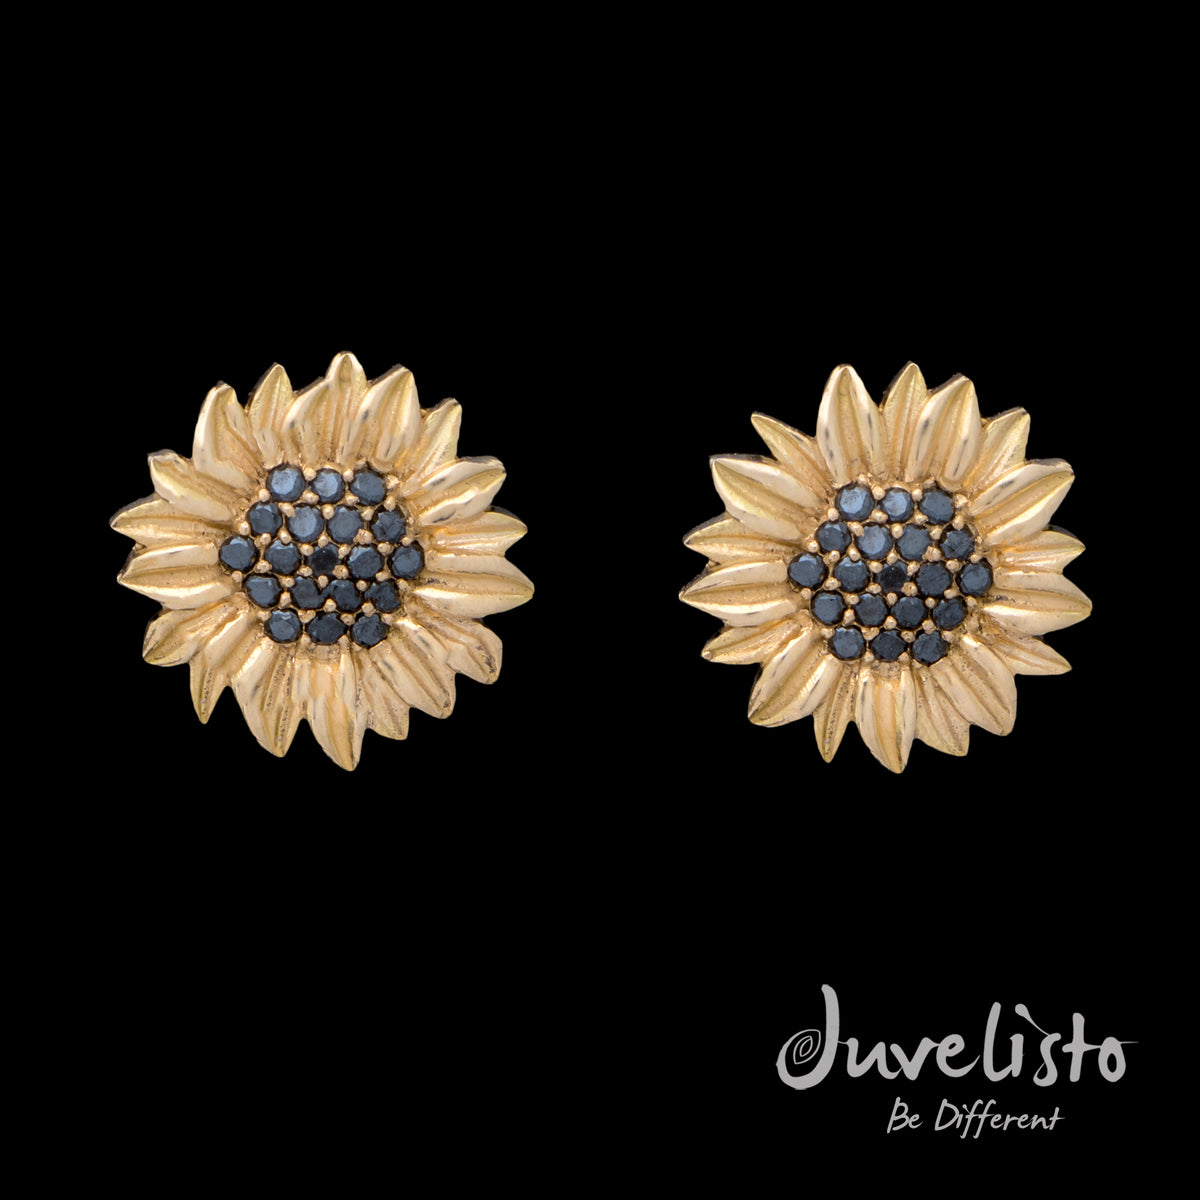 Juvelisto Design | 18K Gold Sunflower Earrings with Black Diamonds